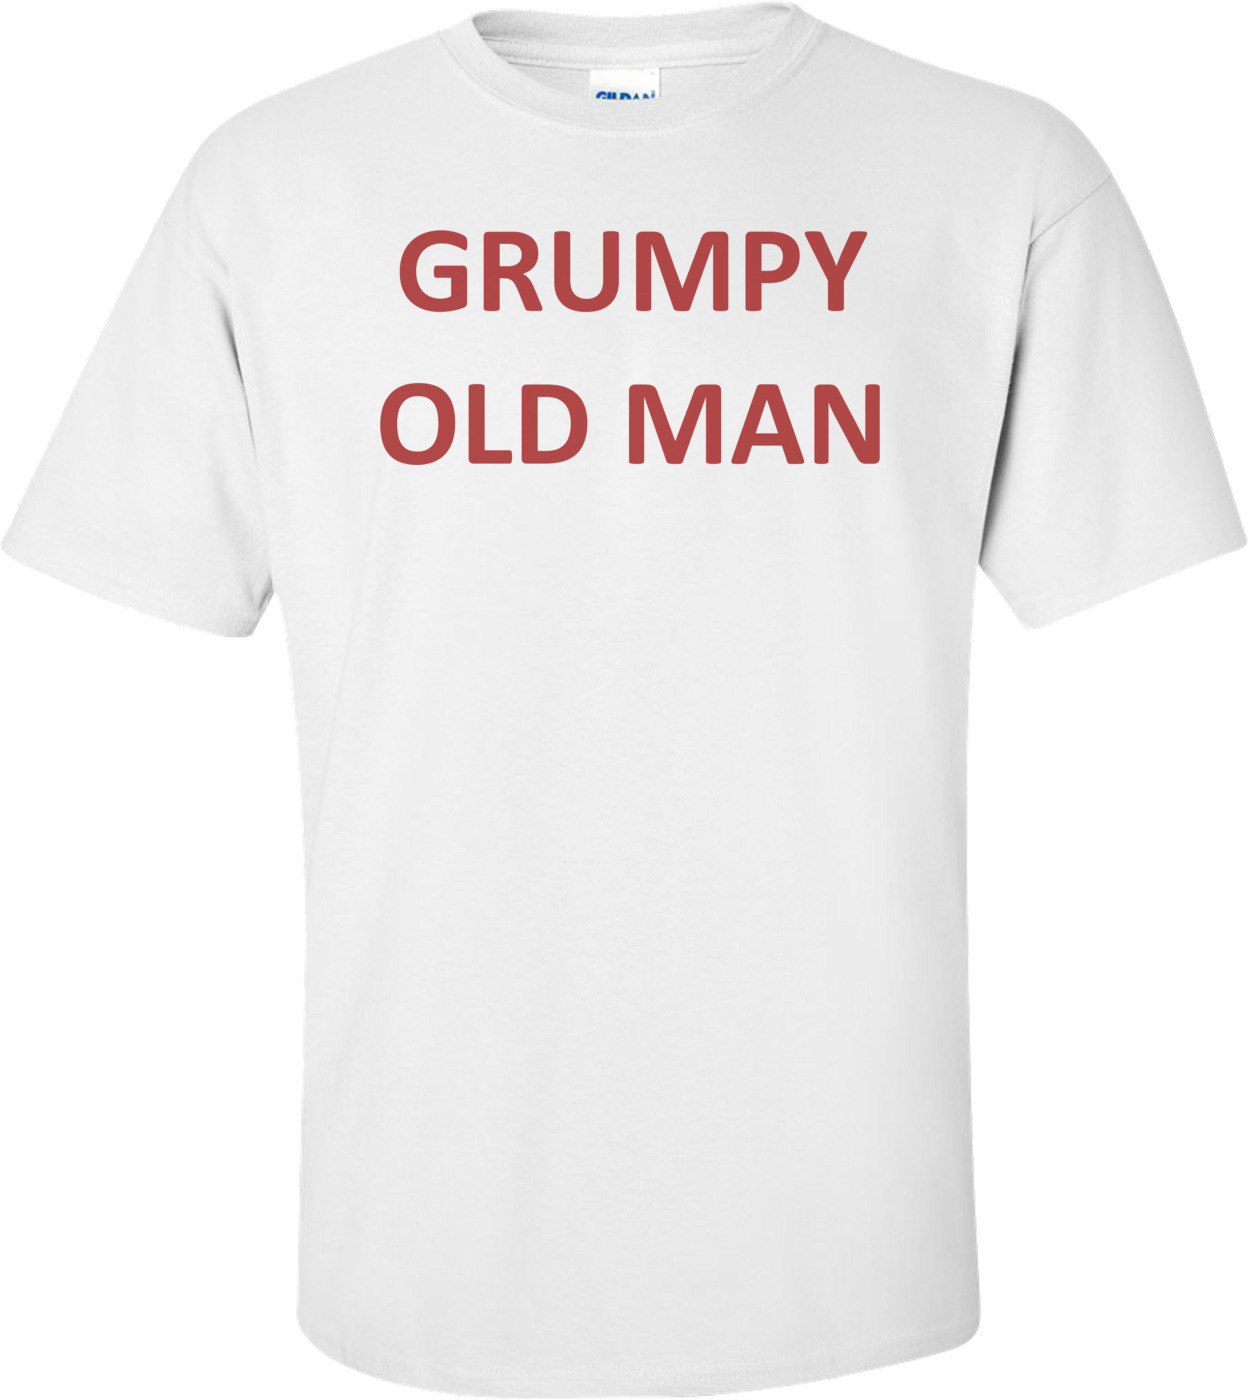 GRUMPY OLD MAN